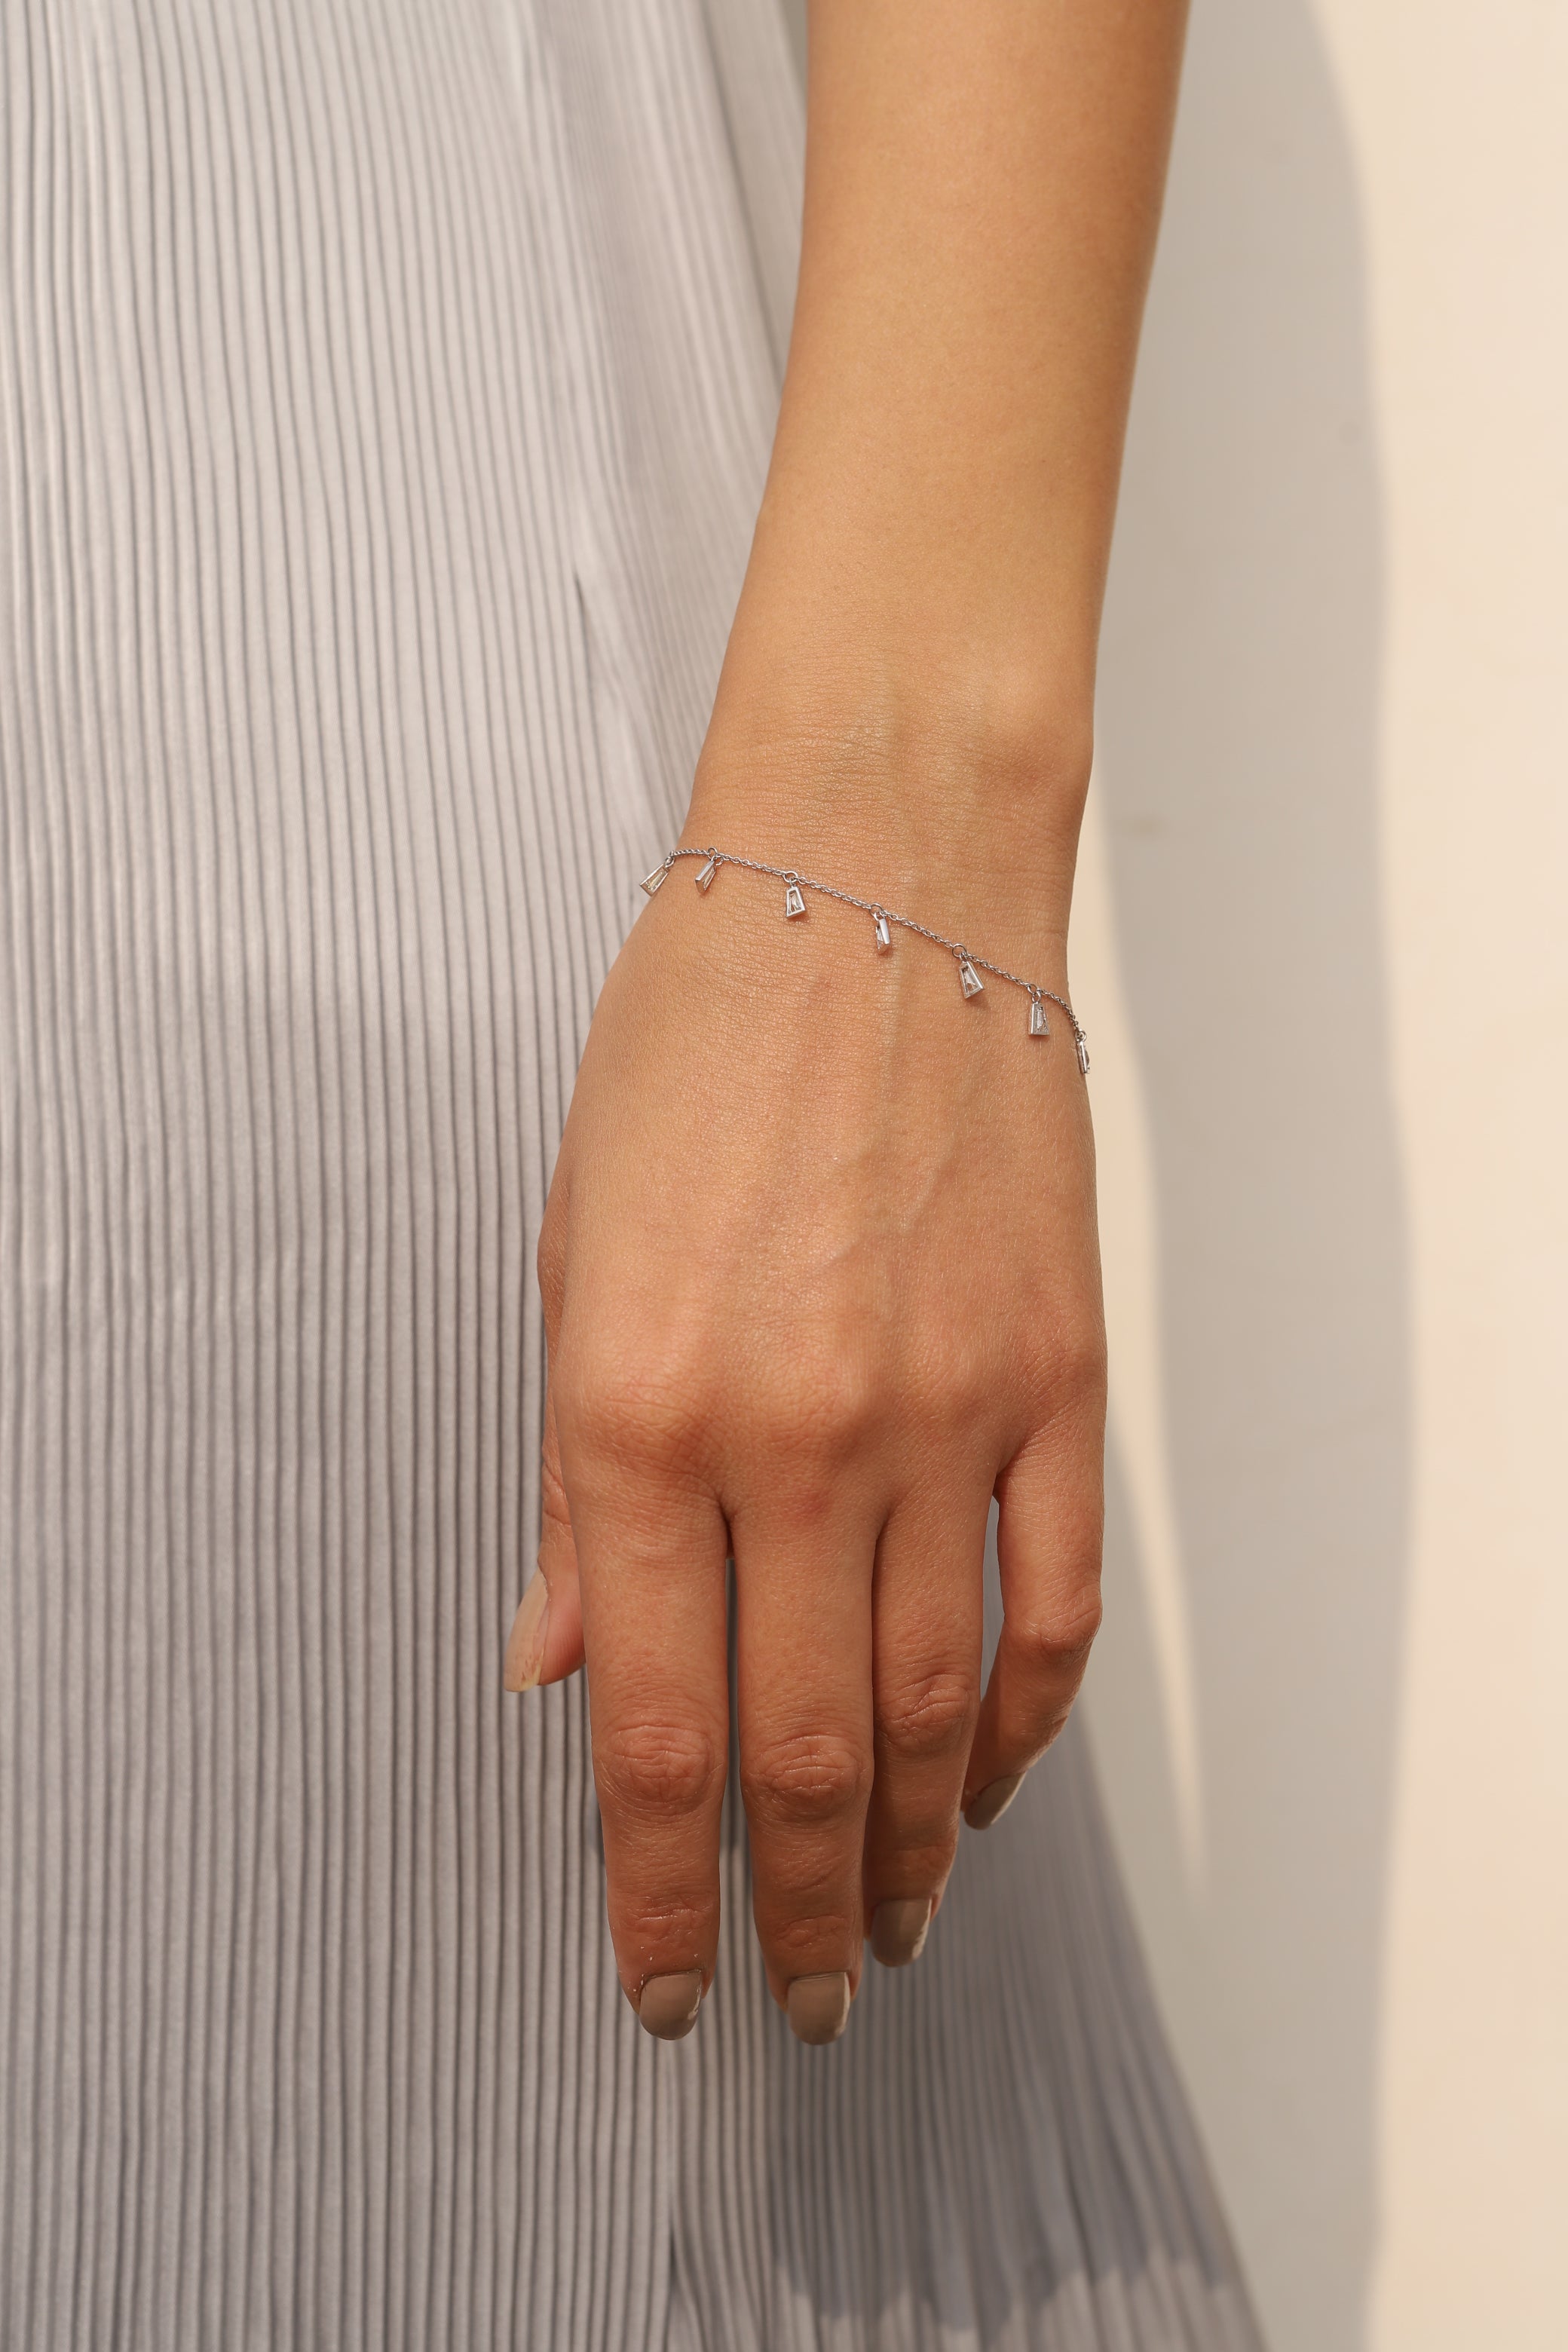 18K White Gold Diamond Bracelet - VR Jewels